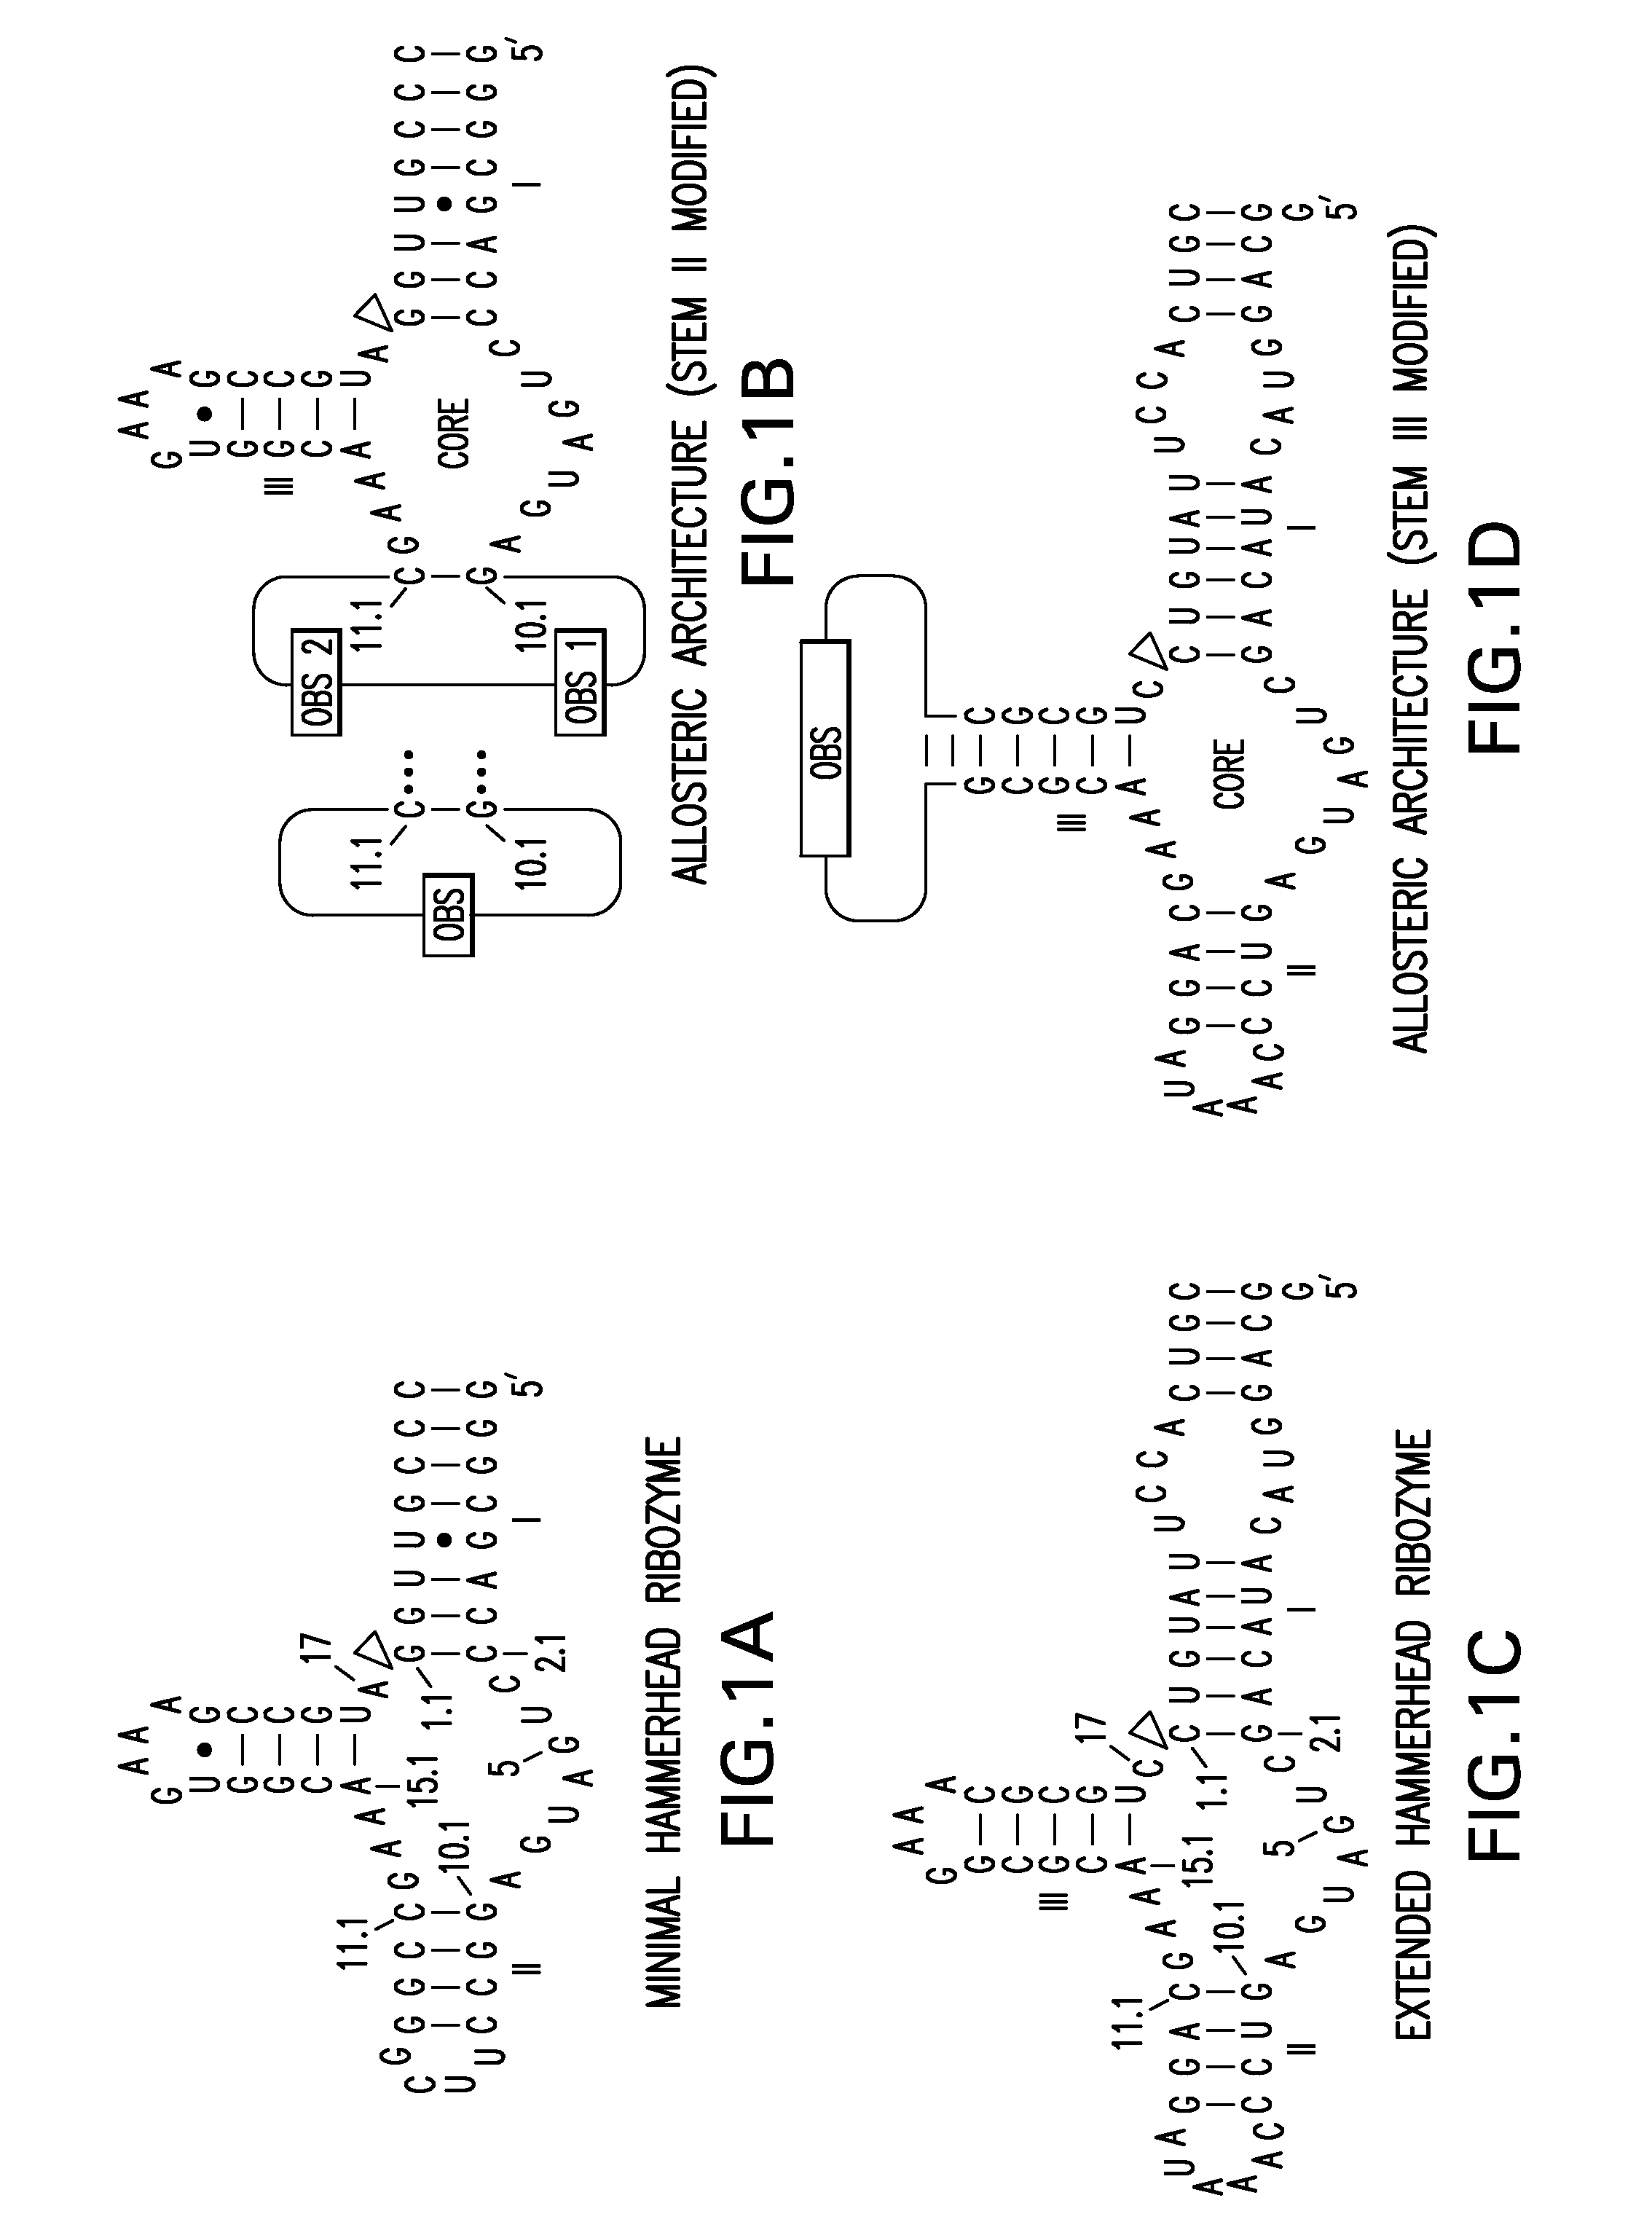 Computational design of ribozymes